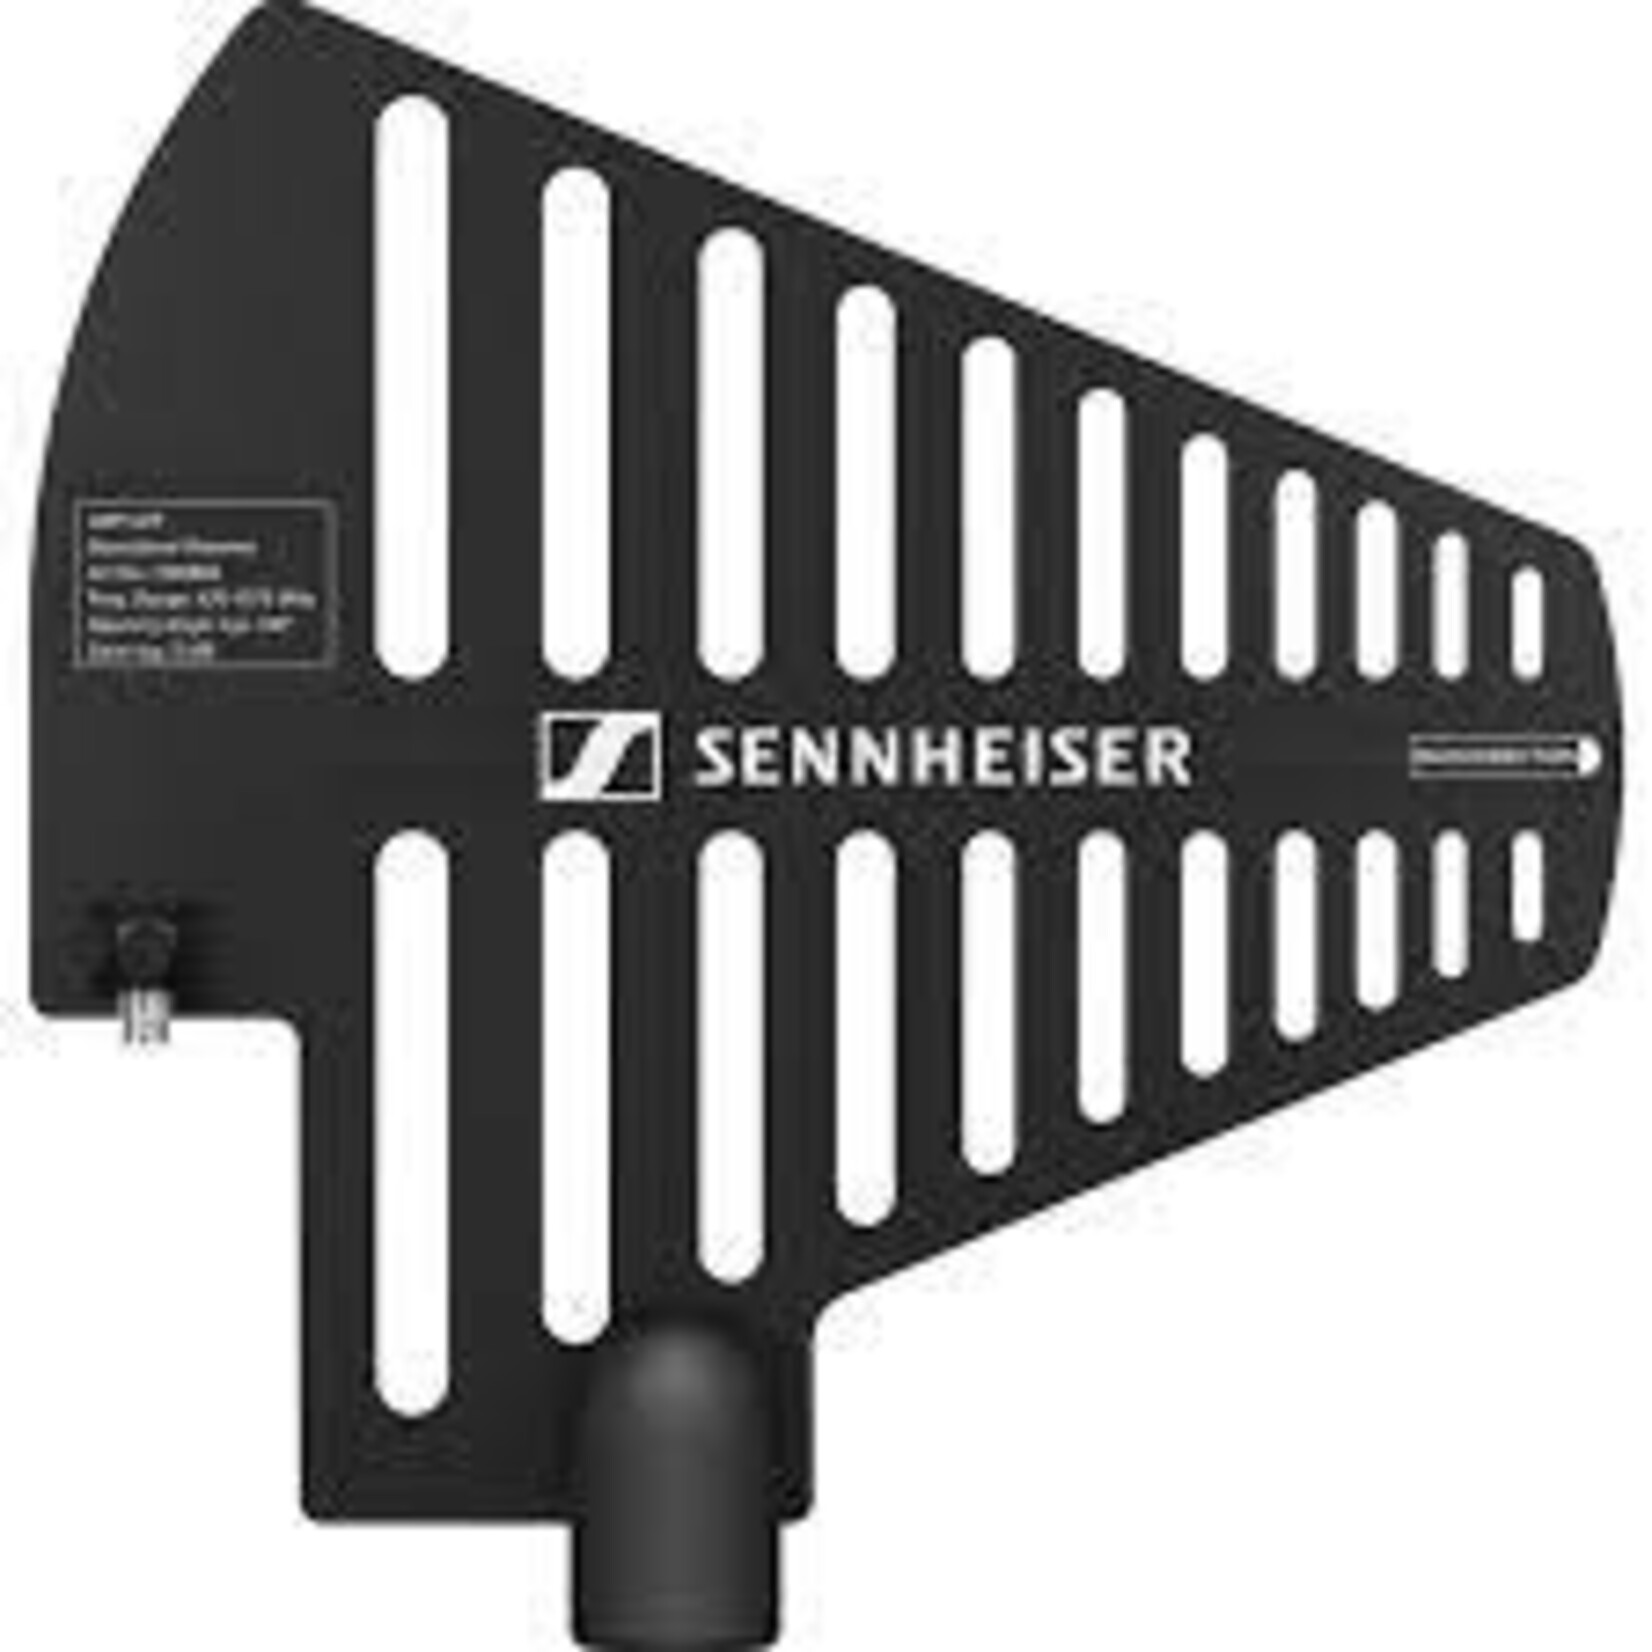 Sennheiser Sennheiser 508863 Directional UHF Antenna